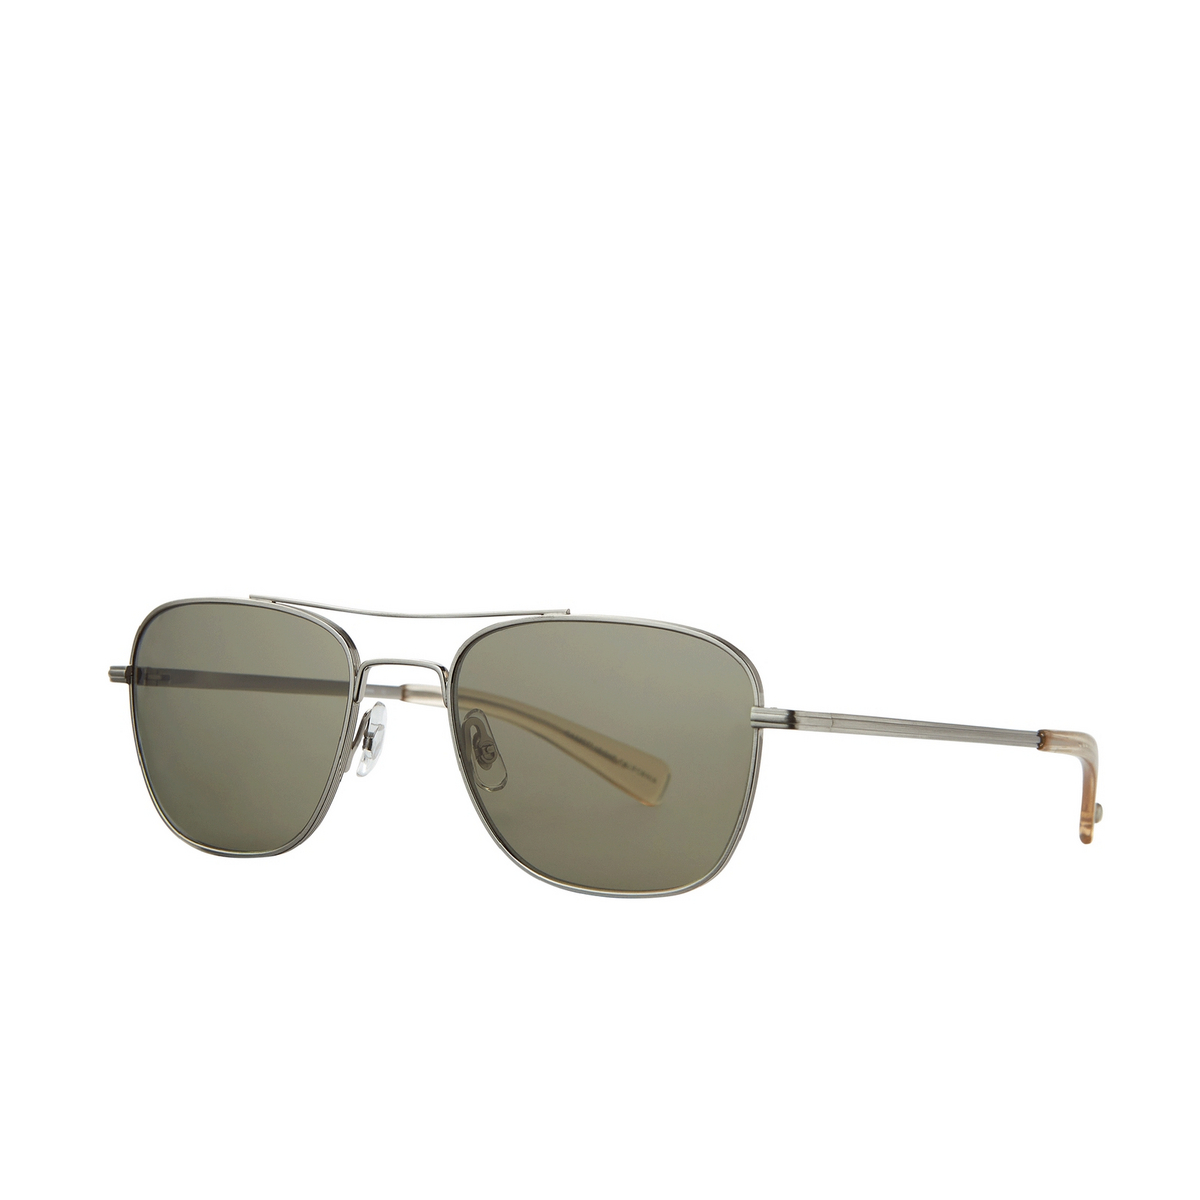 Garrett Leight® Aviator Sunglasses: Harbor Sun color BS-CH/G15SUV Brushed Silver-champagne/g15 Suv - three-quarters view